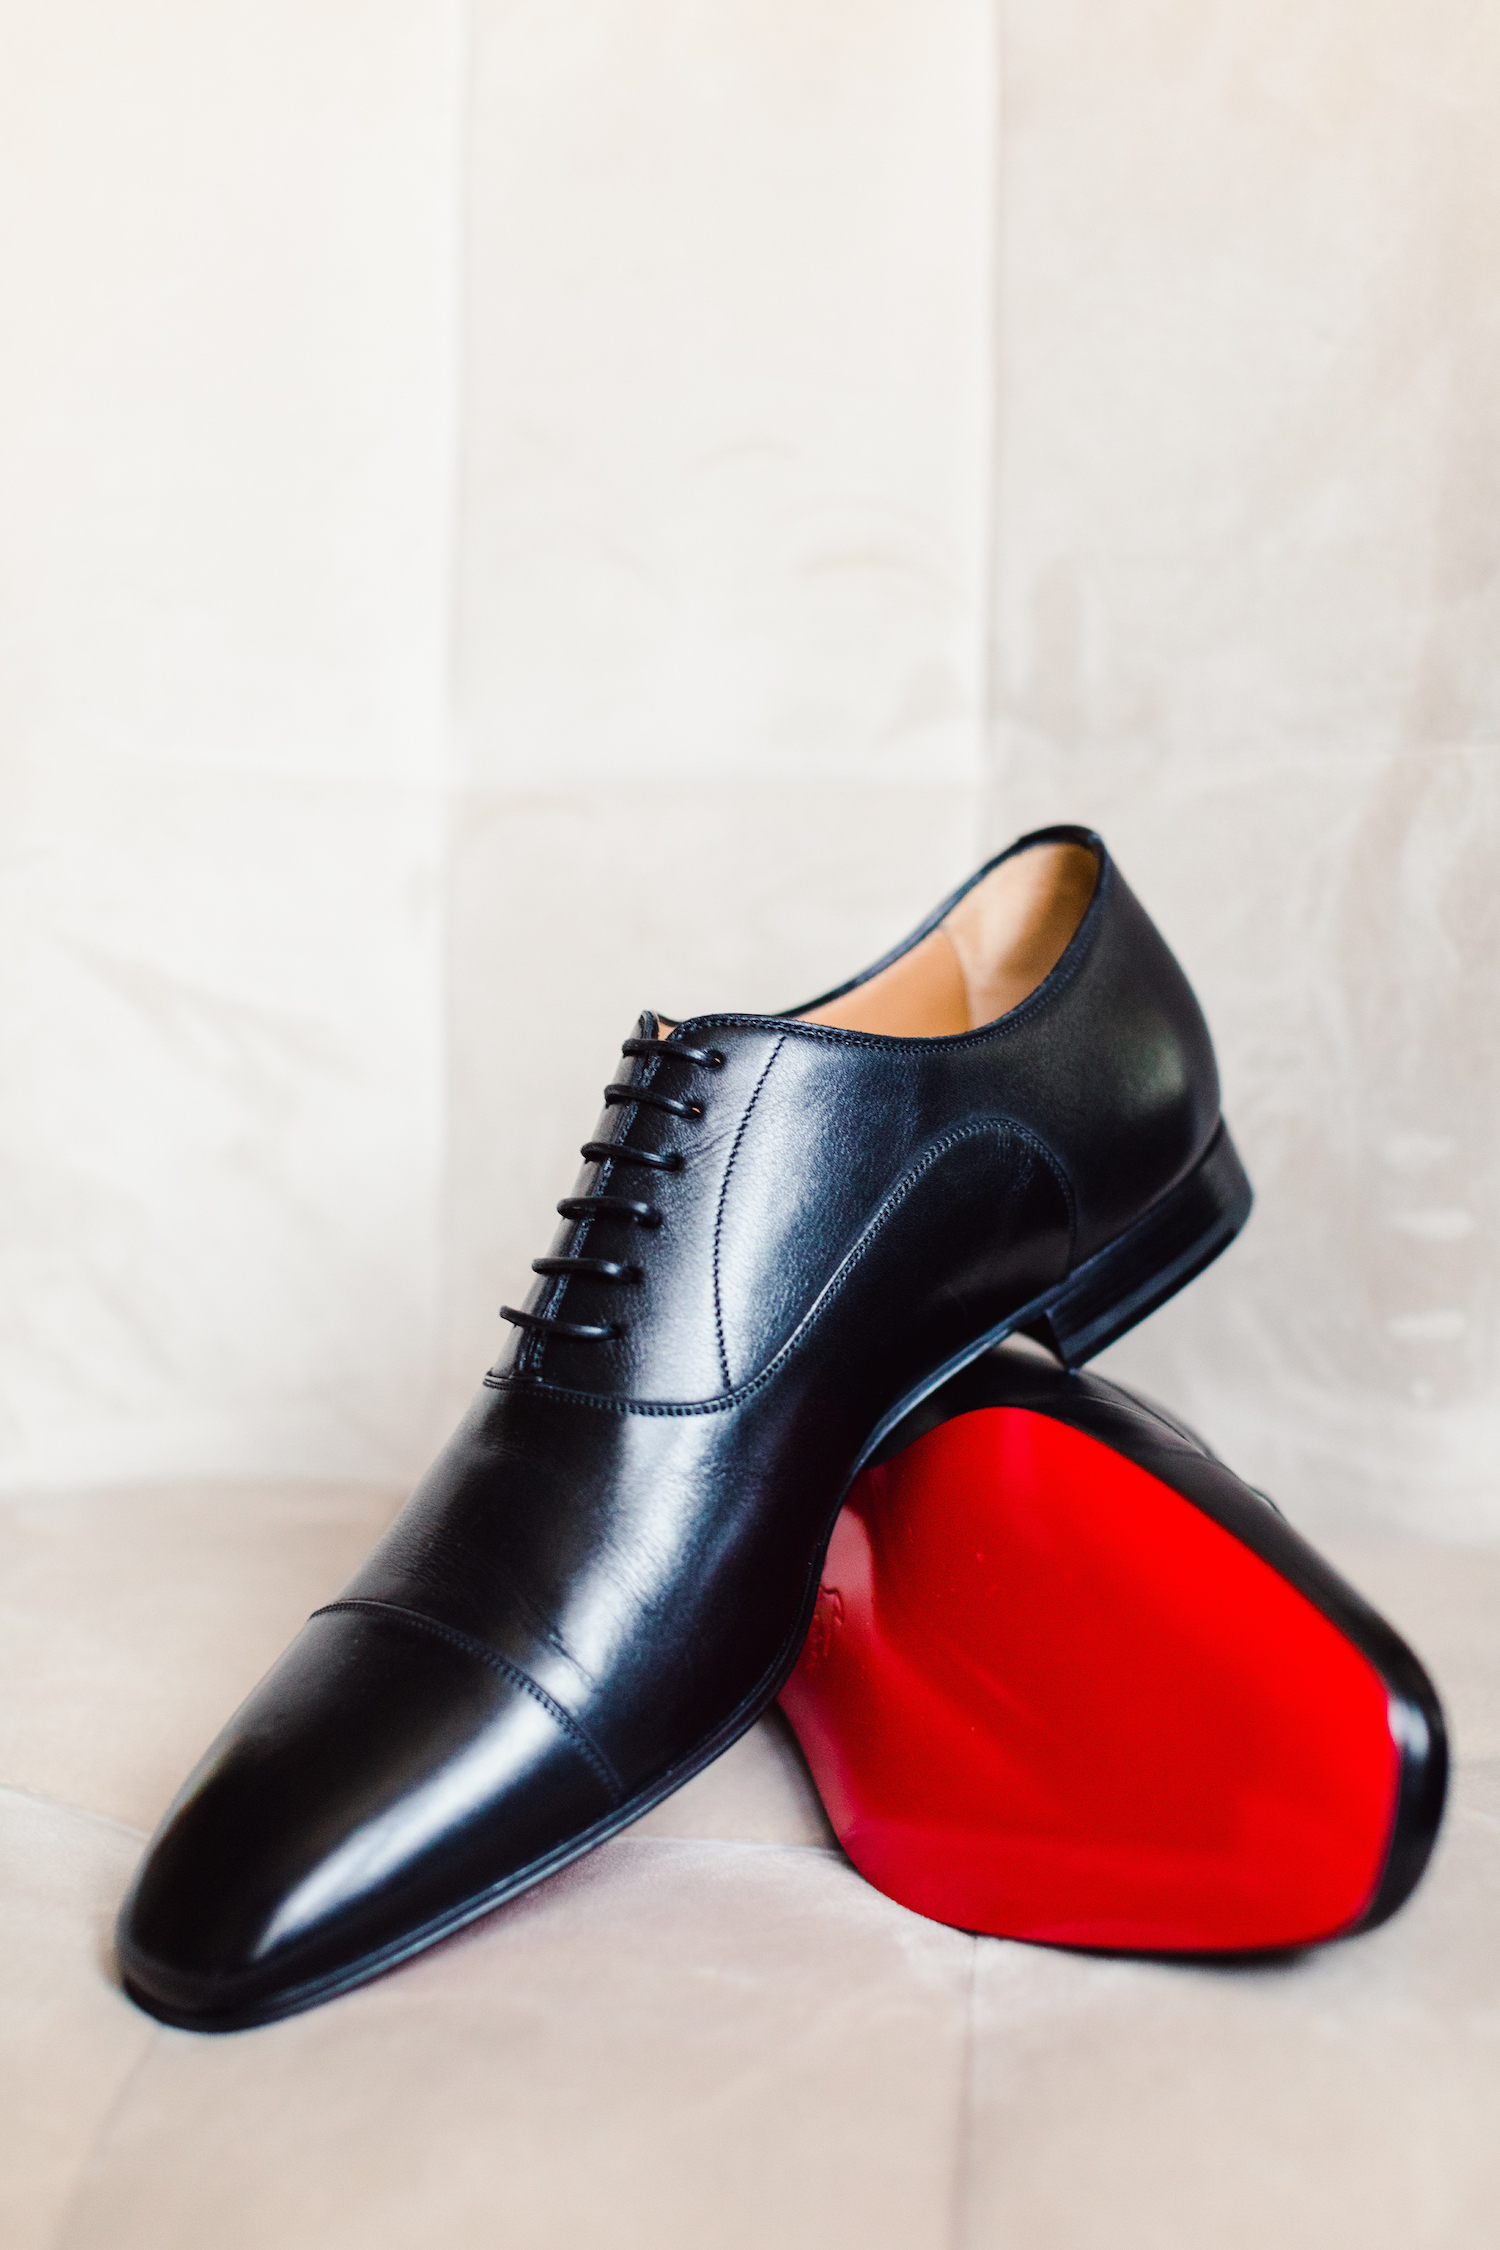 gian carlo groom shoes